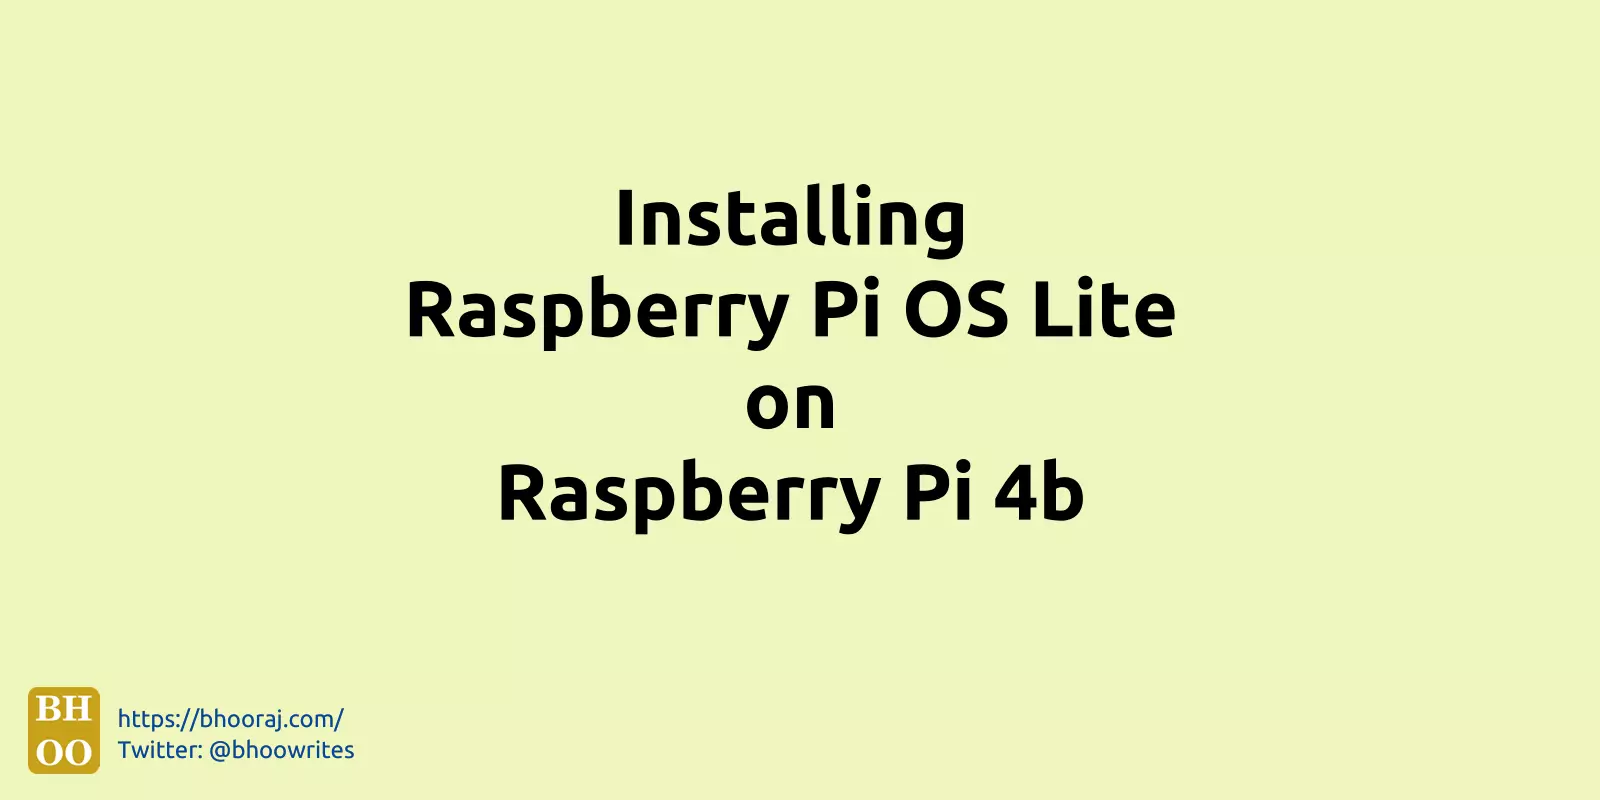 Installing Raspberry Pi OS Lite on Raspberry Pi 4b